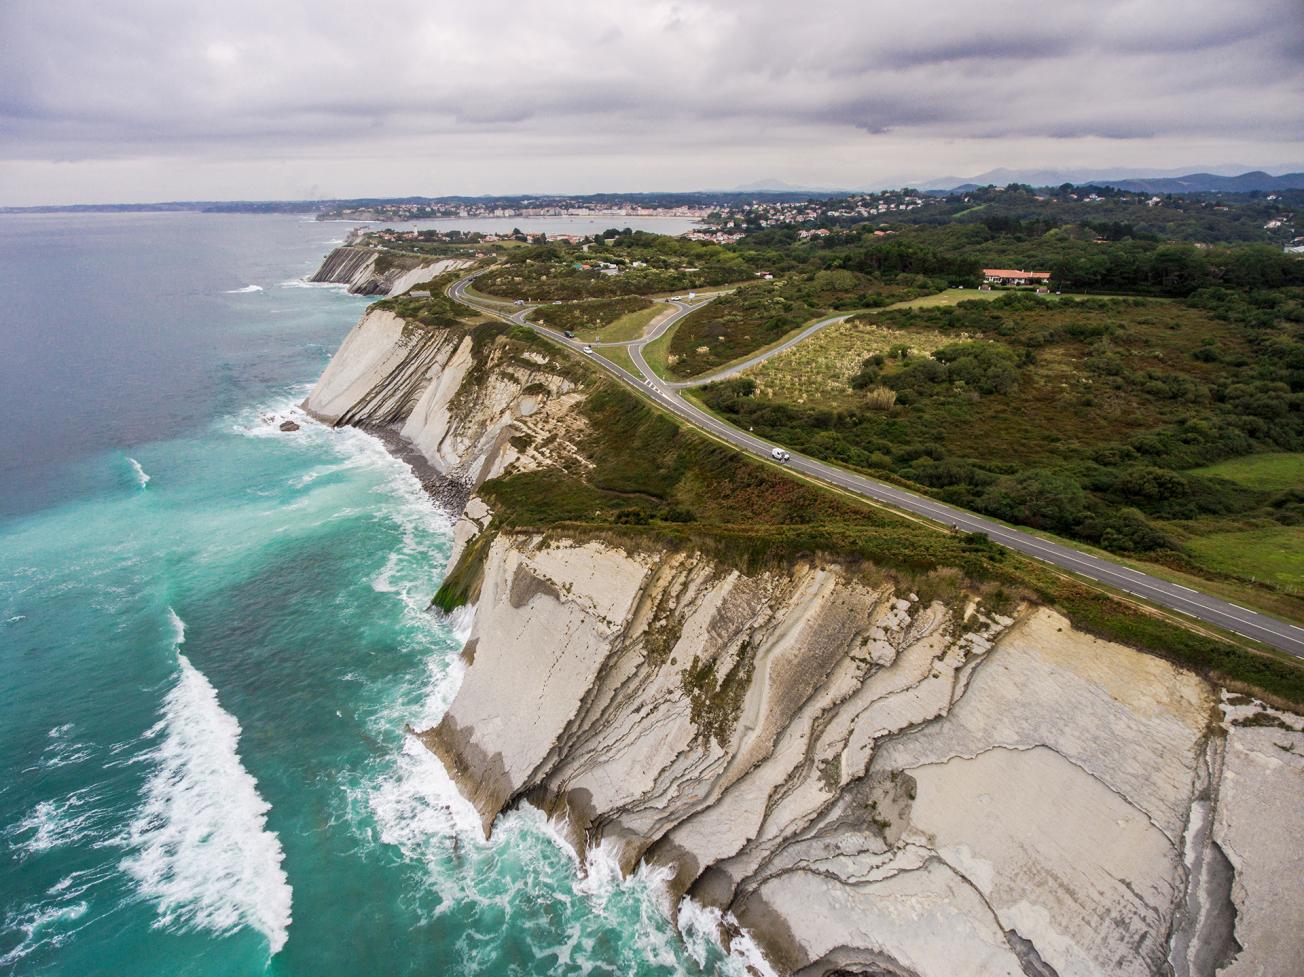 Cliffs on the coastal road at Urrugne 